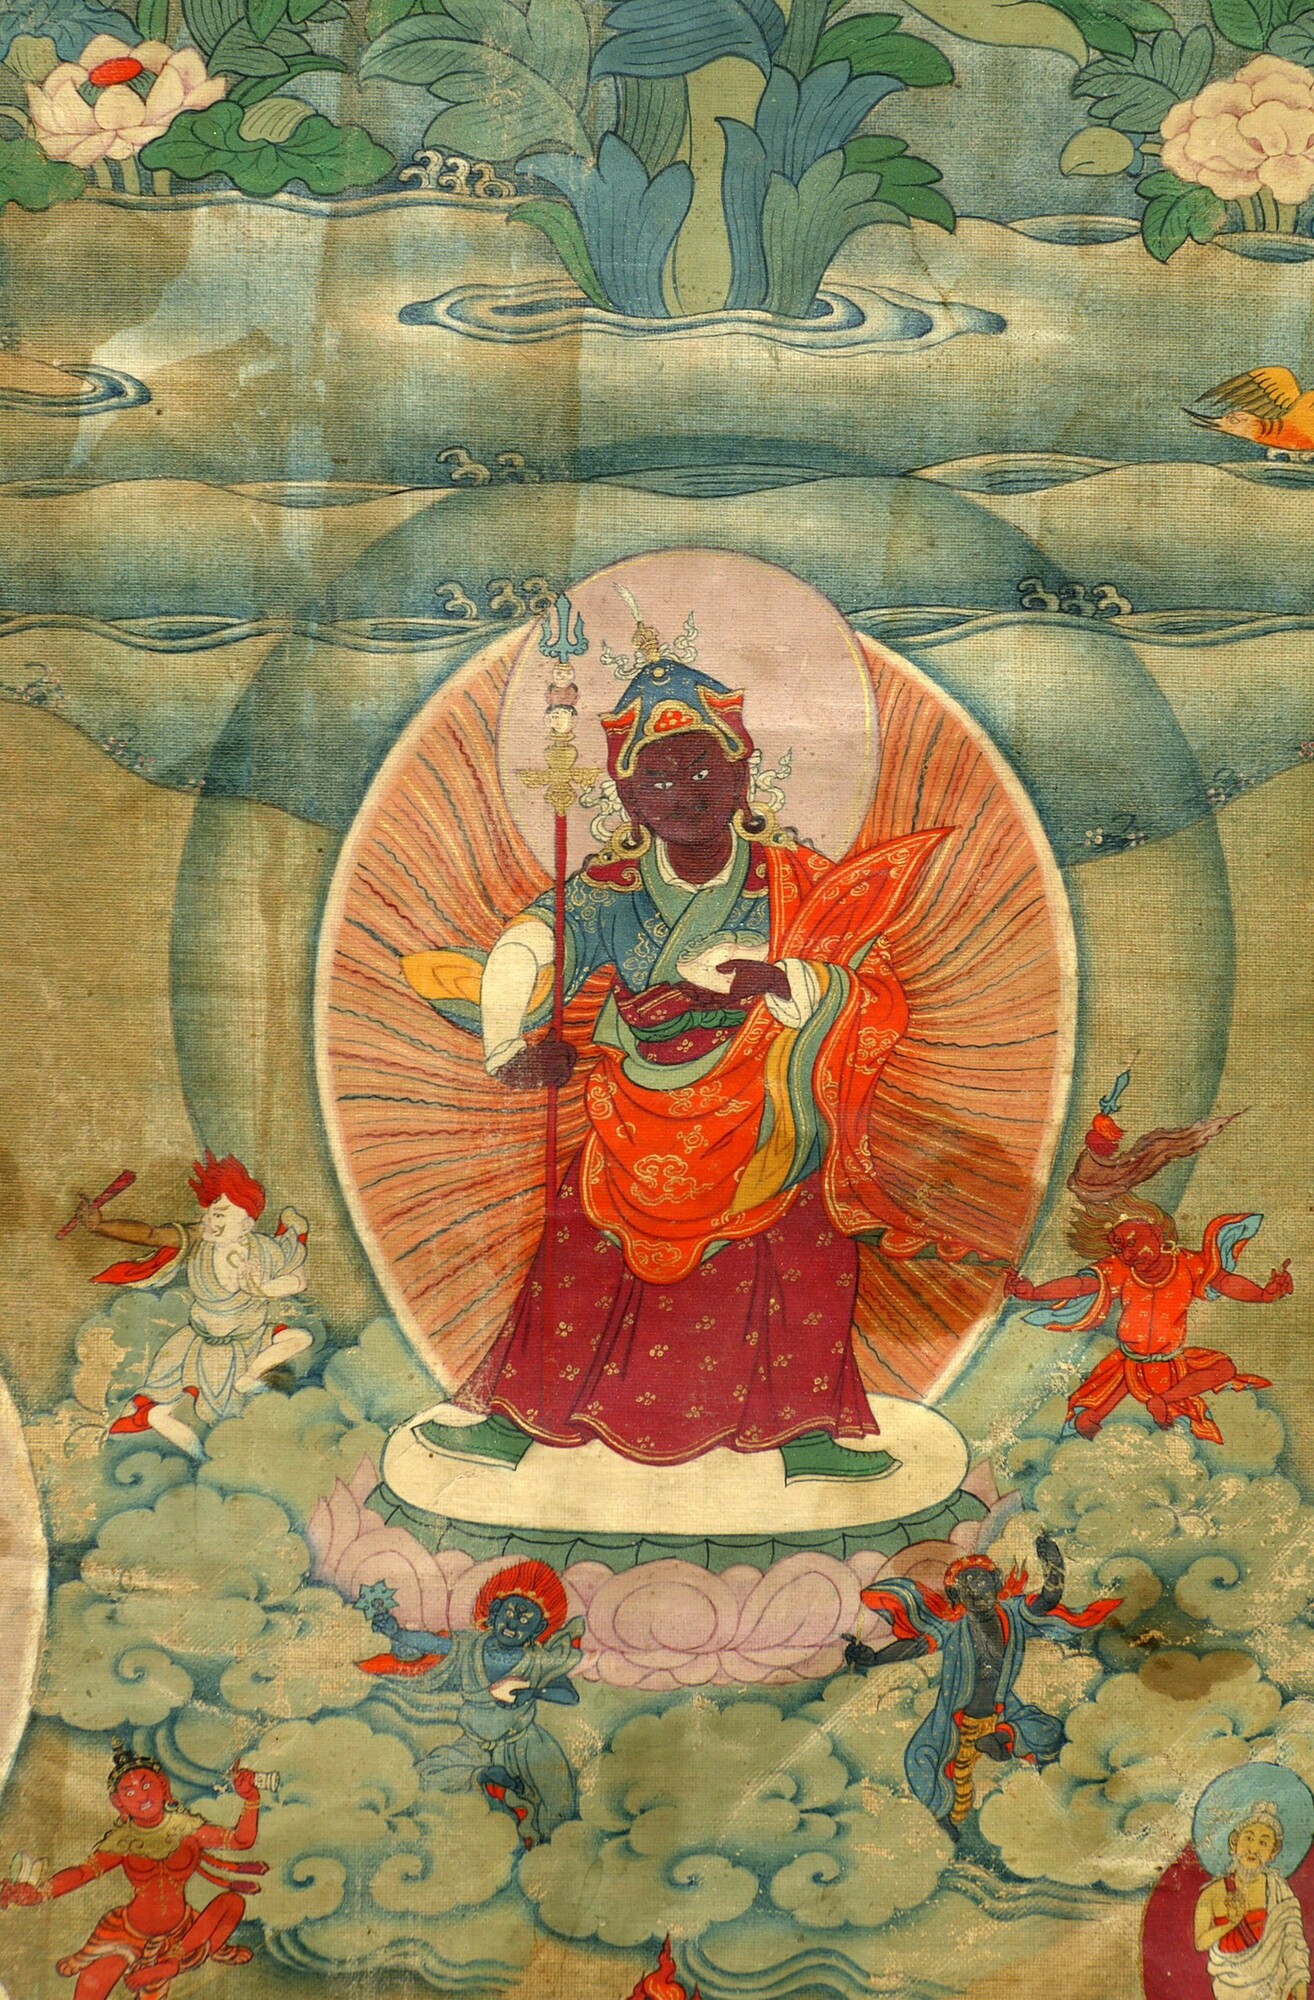 Pin by Jangchub Dorje on Buddhism Tibetan art, Buddhist art, Thangka painting